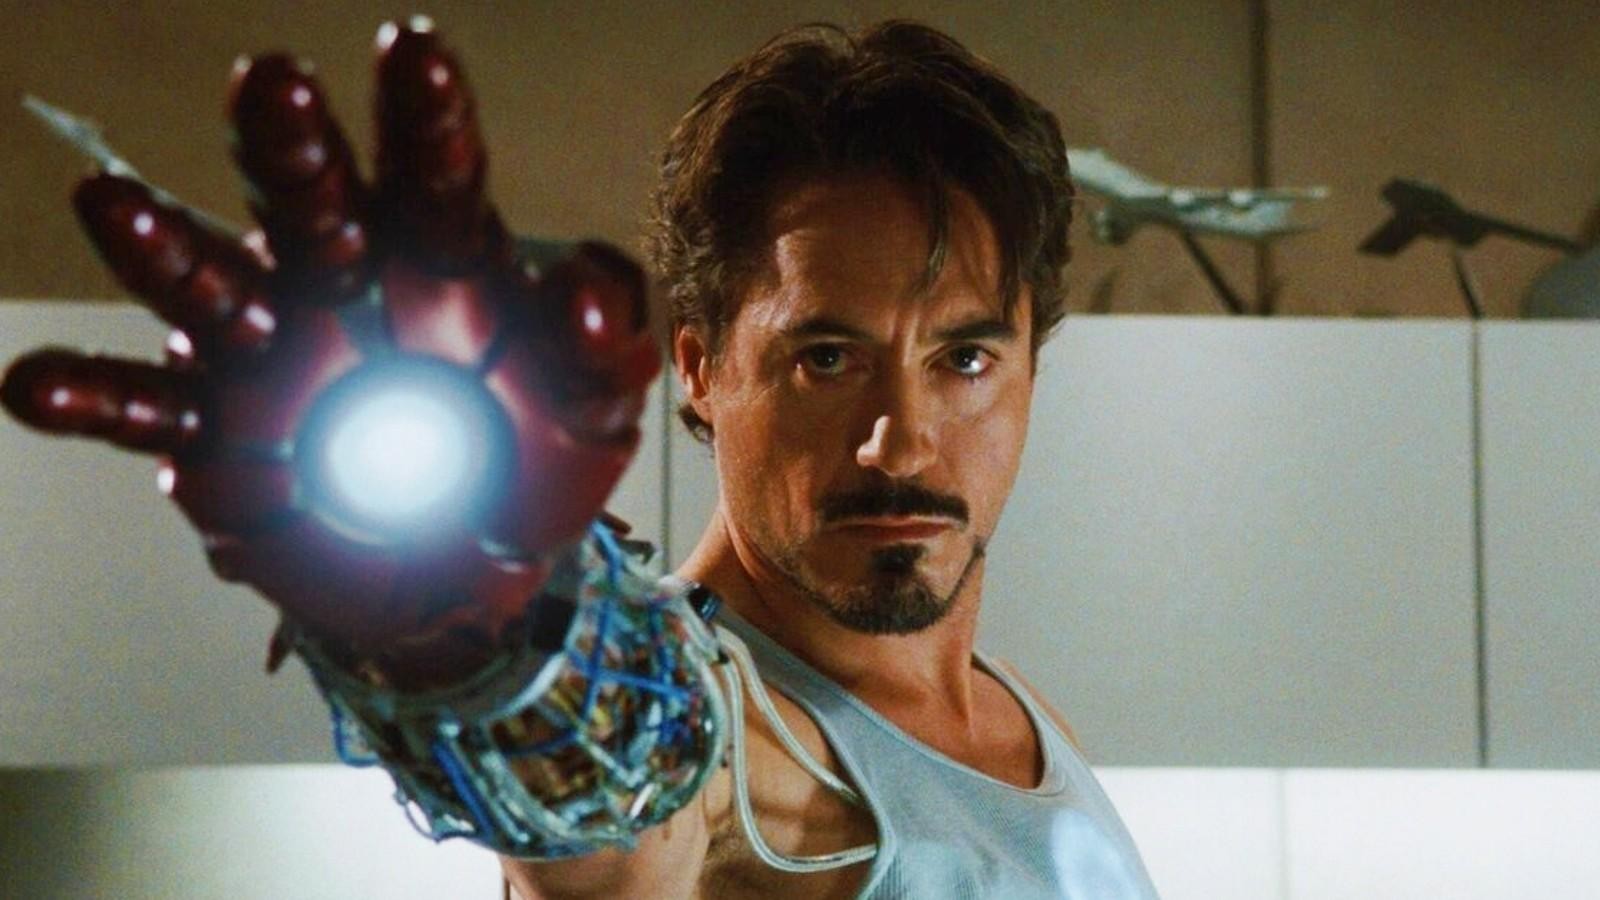 Christopher Nolan hailed Robert Downey Jr.'s casting as Iron Man